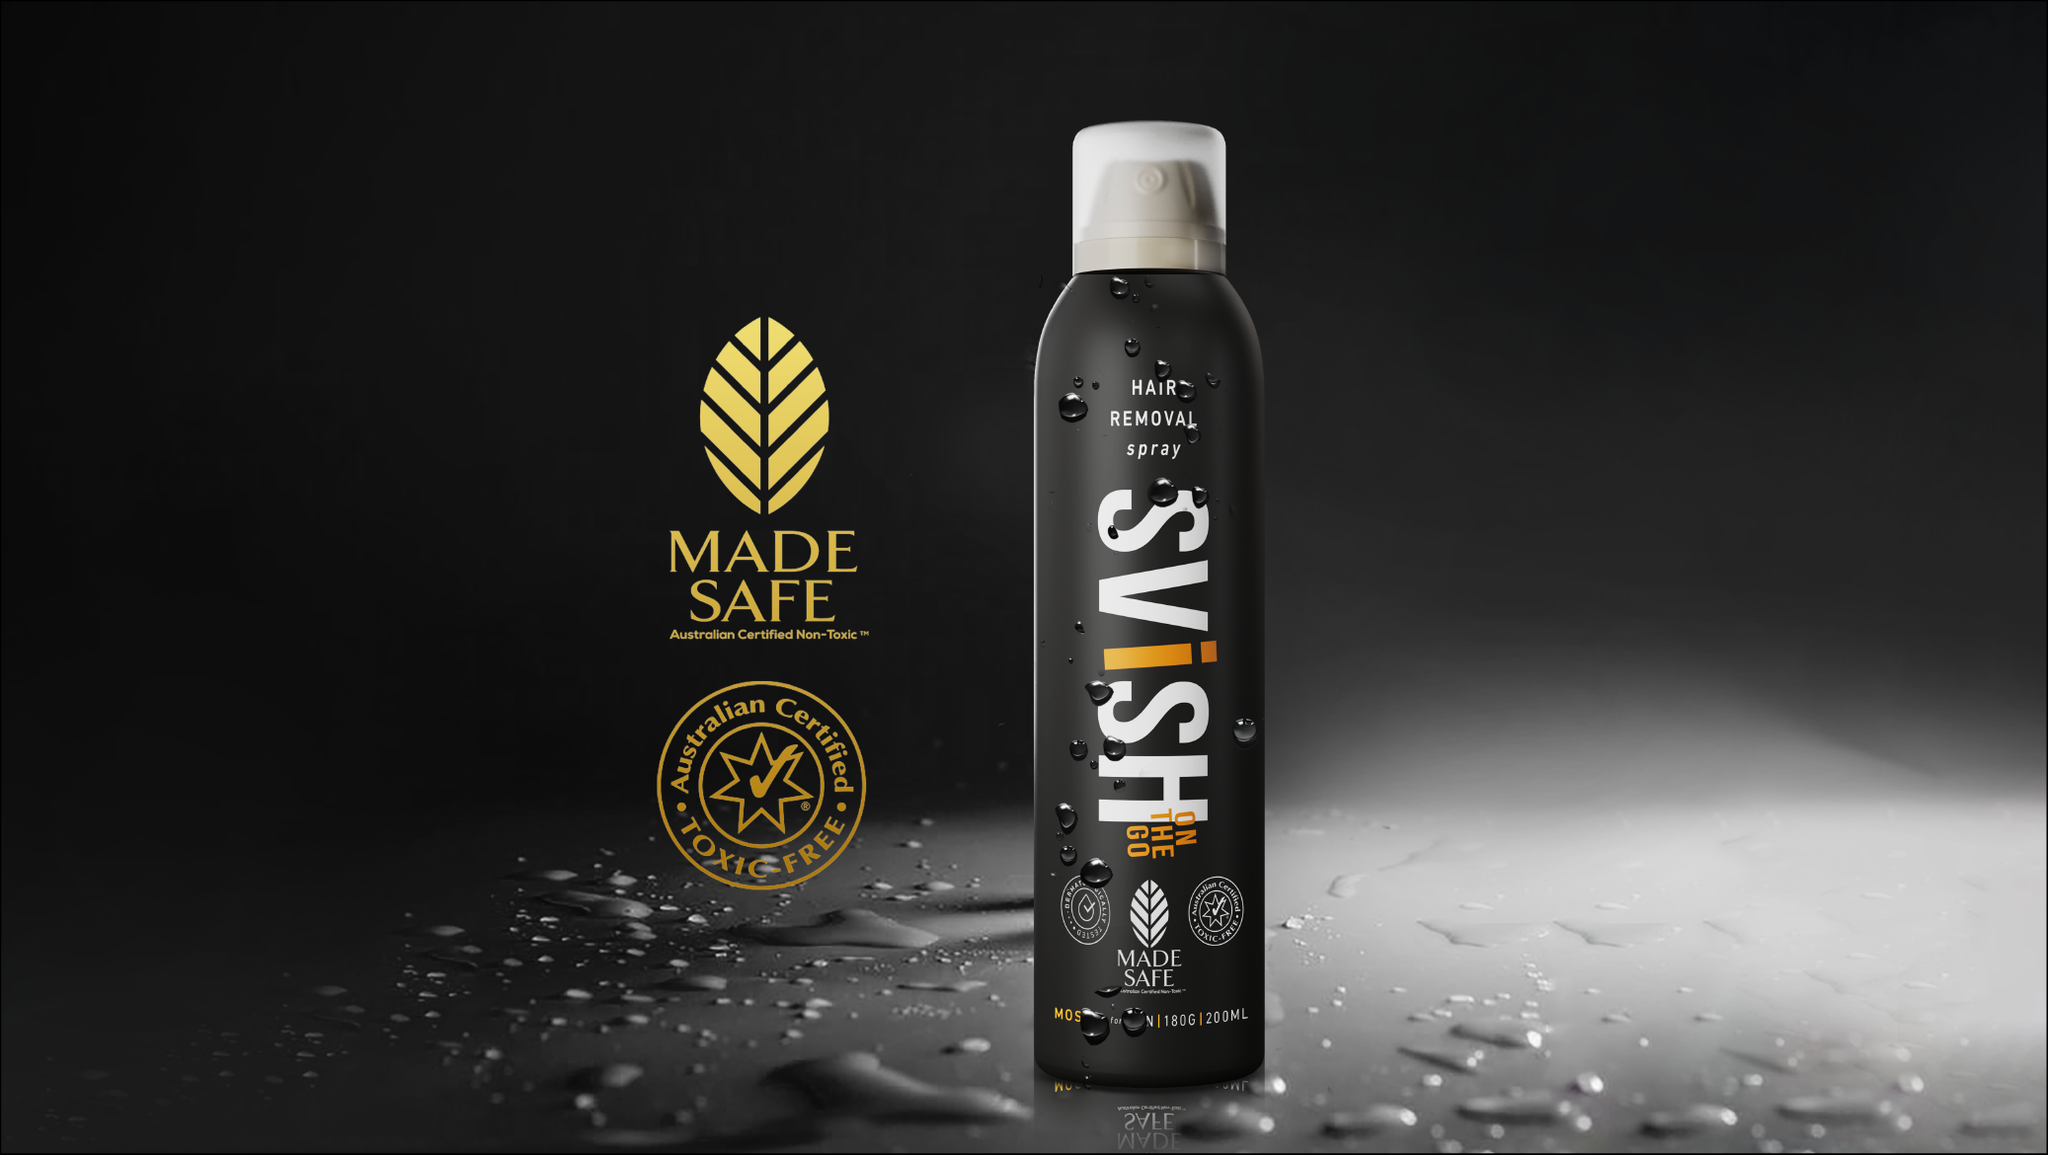 World’s 1st Made Safe Australian Certified SVISH Hair Removal Spray for Men